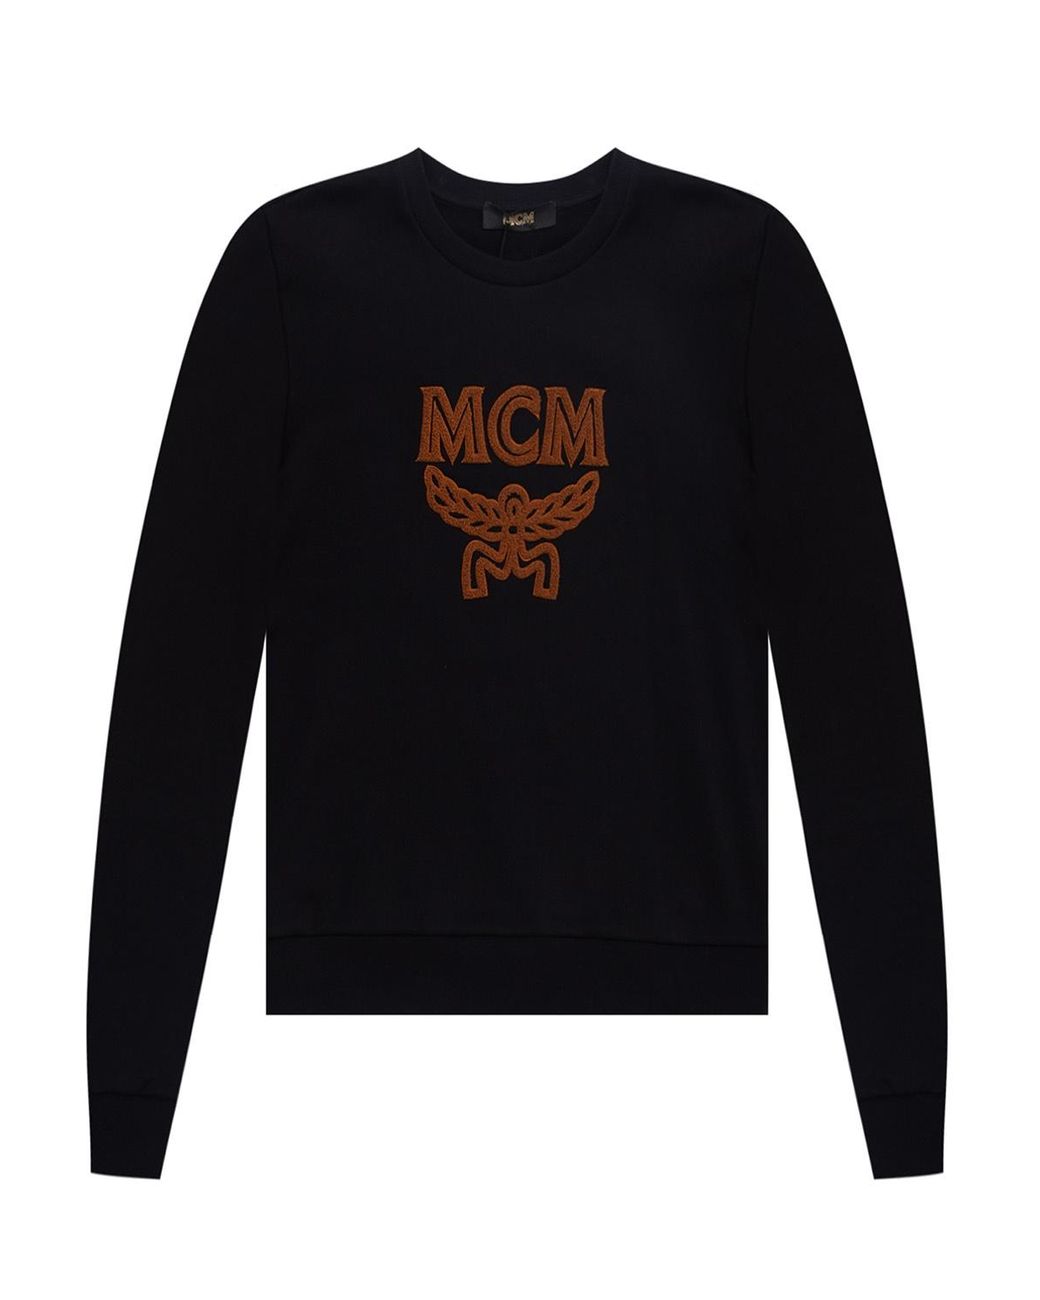 MCM Cotton Sweatshirt With Logo Black for Men - Lyst